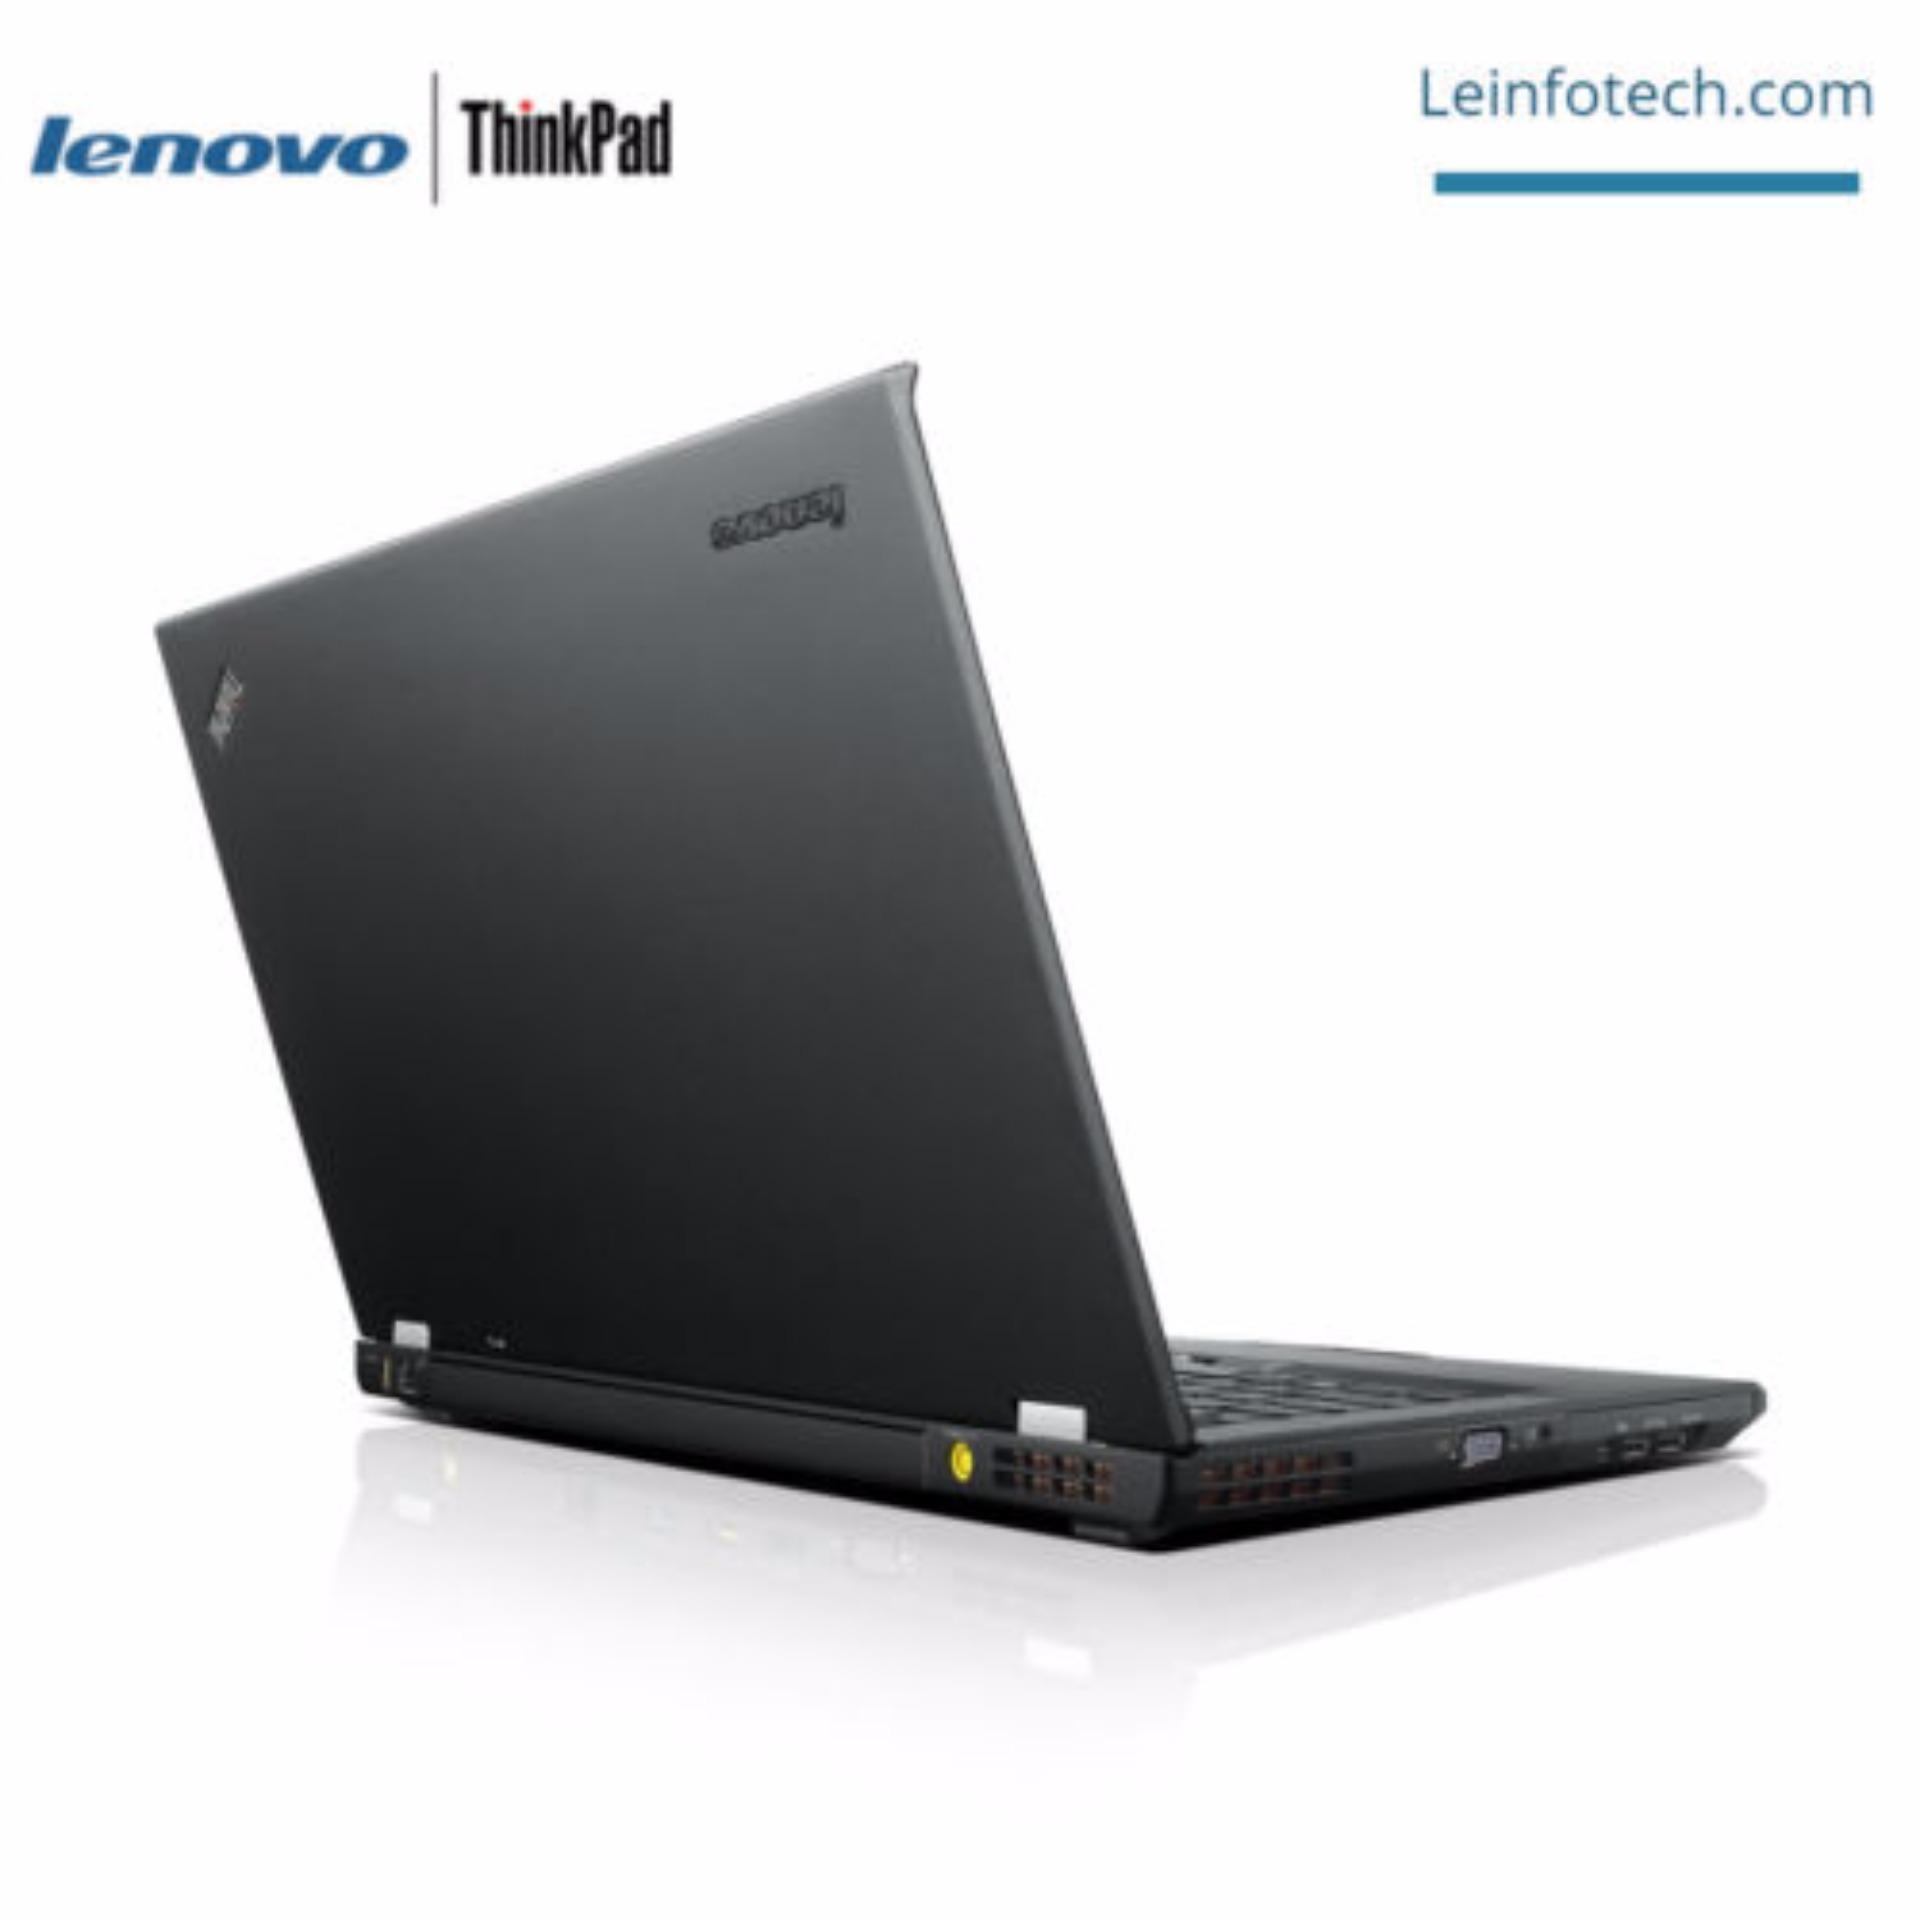 Lenovo ThinkPad T430 Notebook i5-3320M#2.6Ghz 8GB DDR3 320GB HDD WIN10 Pro 14in Warranty Used